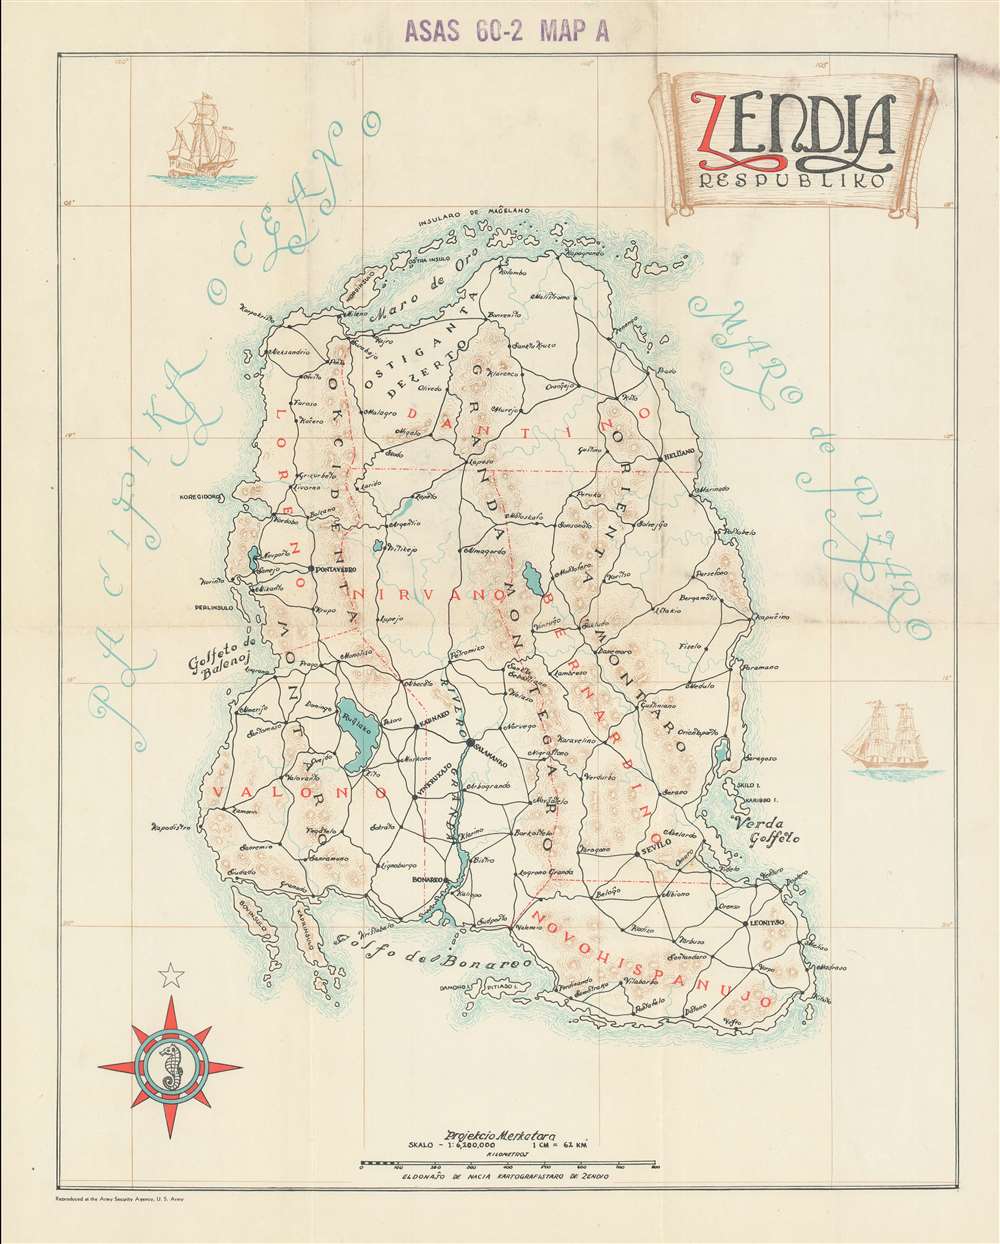 Zendia Respubliko (ASAS 60-2 MAP A)/ Norda Parto de la Provinco Loreno (ASAS 60-2 MAP B)/ Centra Parto de la Provinco Loreno (ASAS 60-2 MAP C). - Alternate View 1